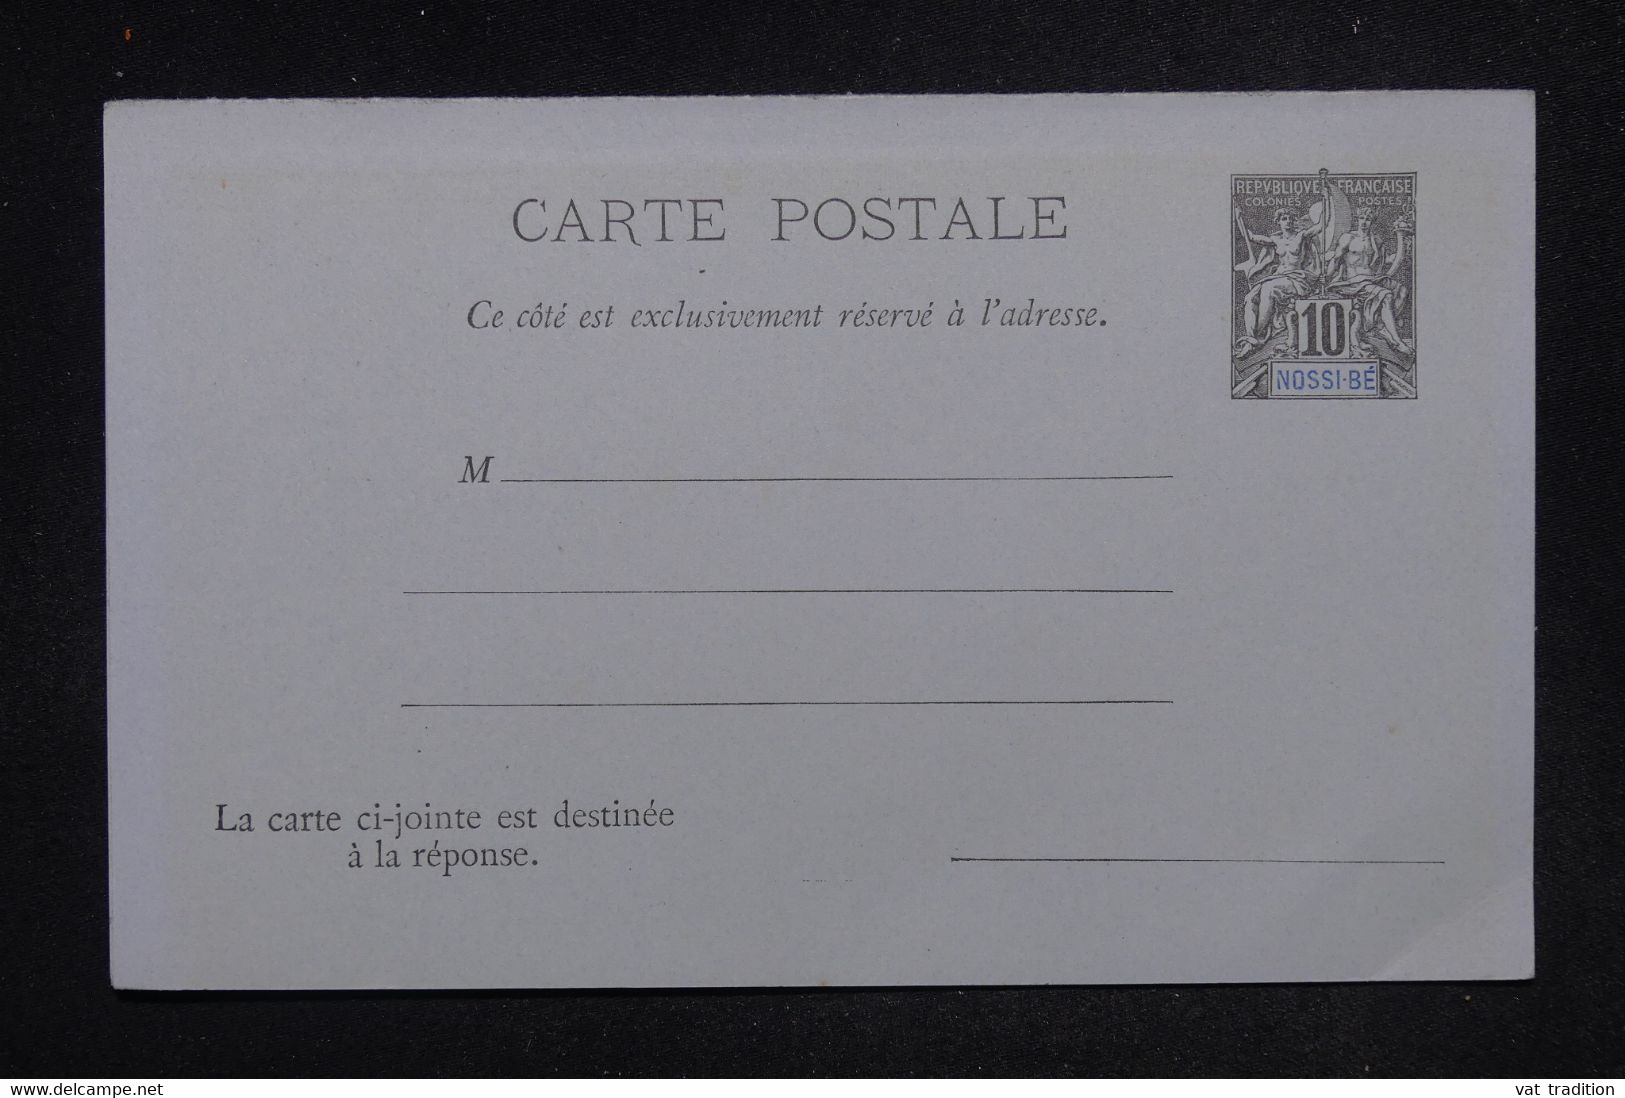 NOSSI BE - Entier Postal Type Groupe ,non Circulé - L 122078 - Briefe U. Dokumente